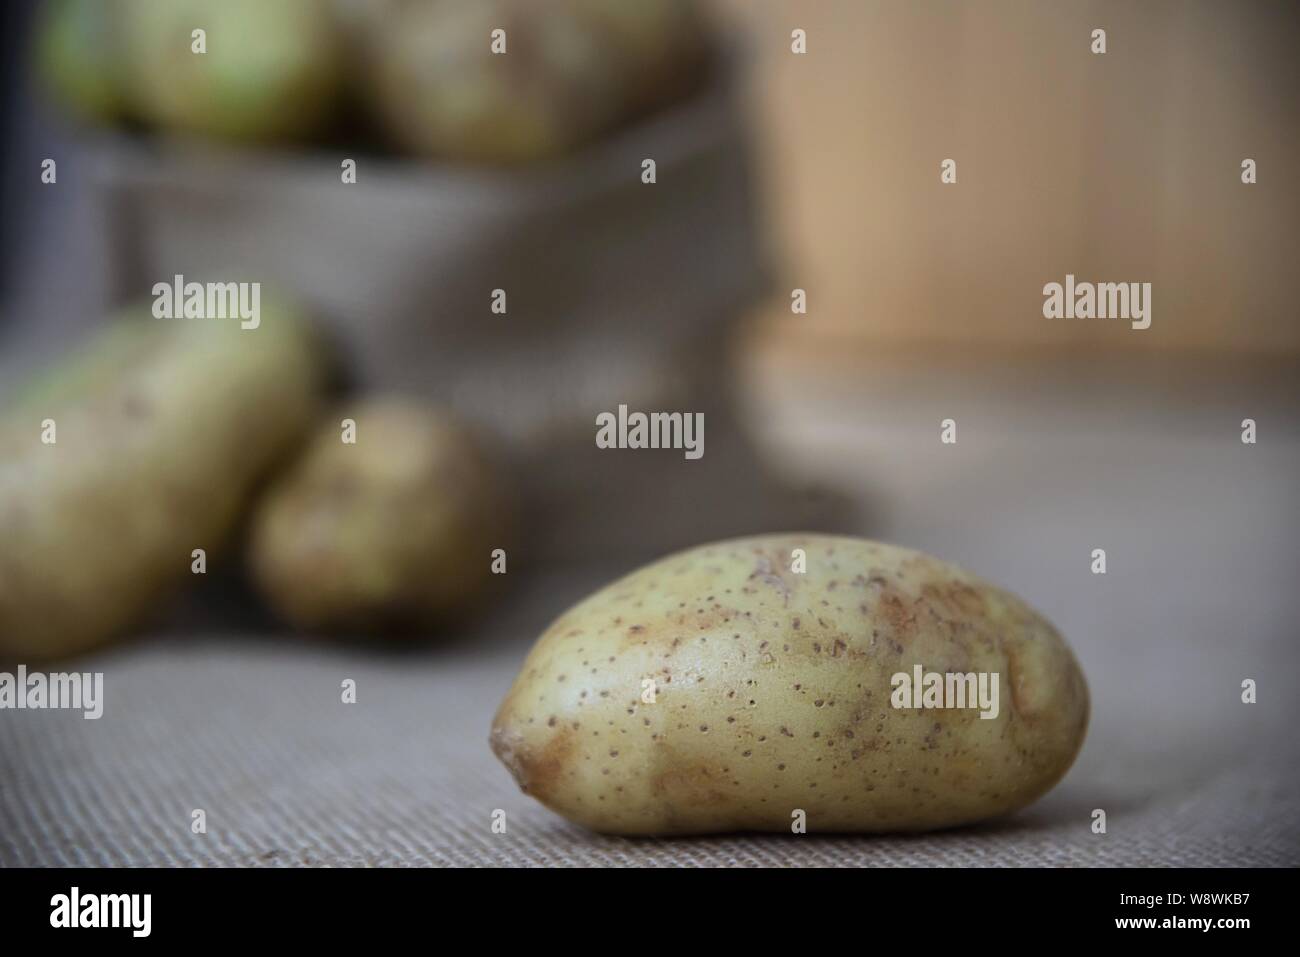 https://c8.alamy.com/comp/W8WKB7/fresh-potato-ready-for-cooking-with-potato-sack-background-potato-cooking-concept-W8WKB7.jpg